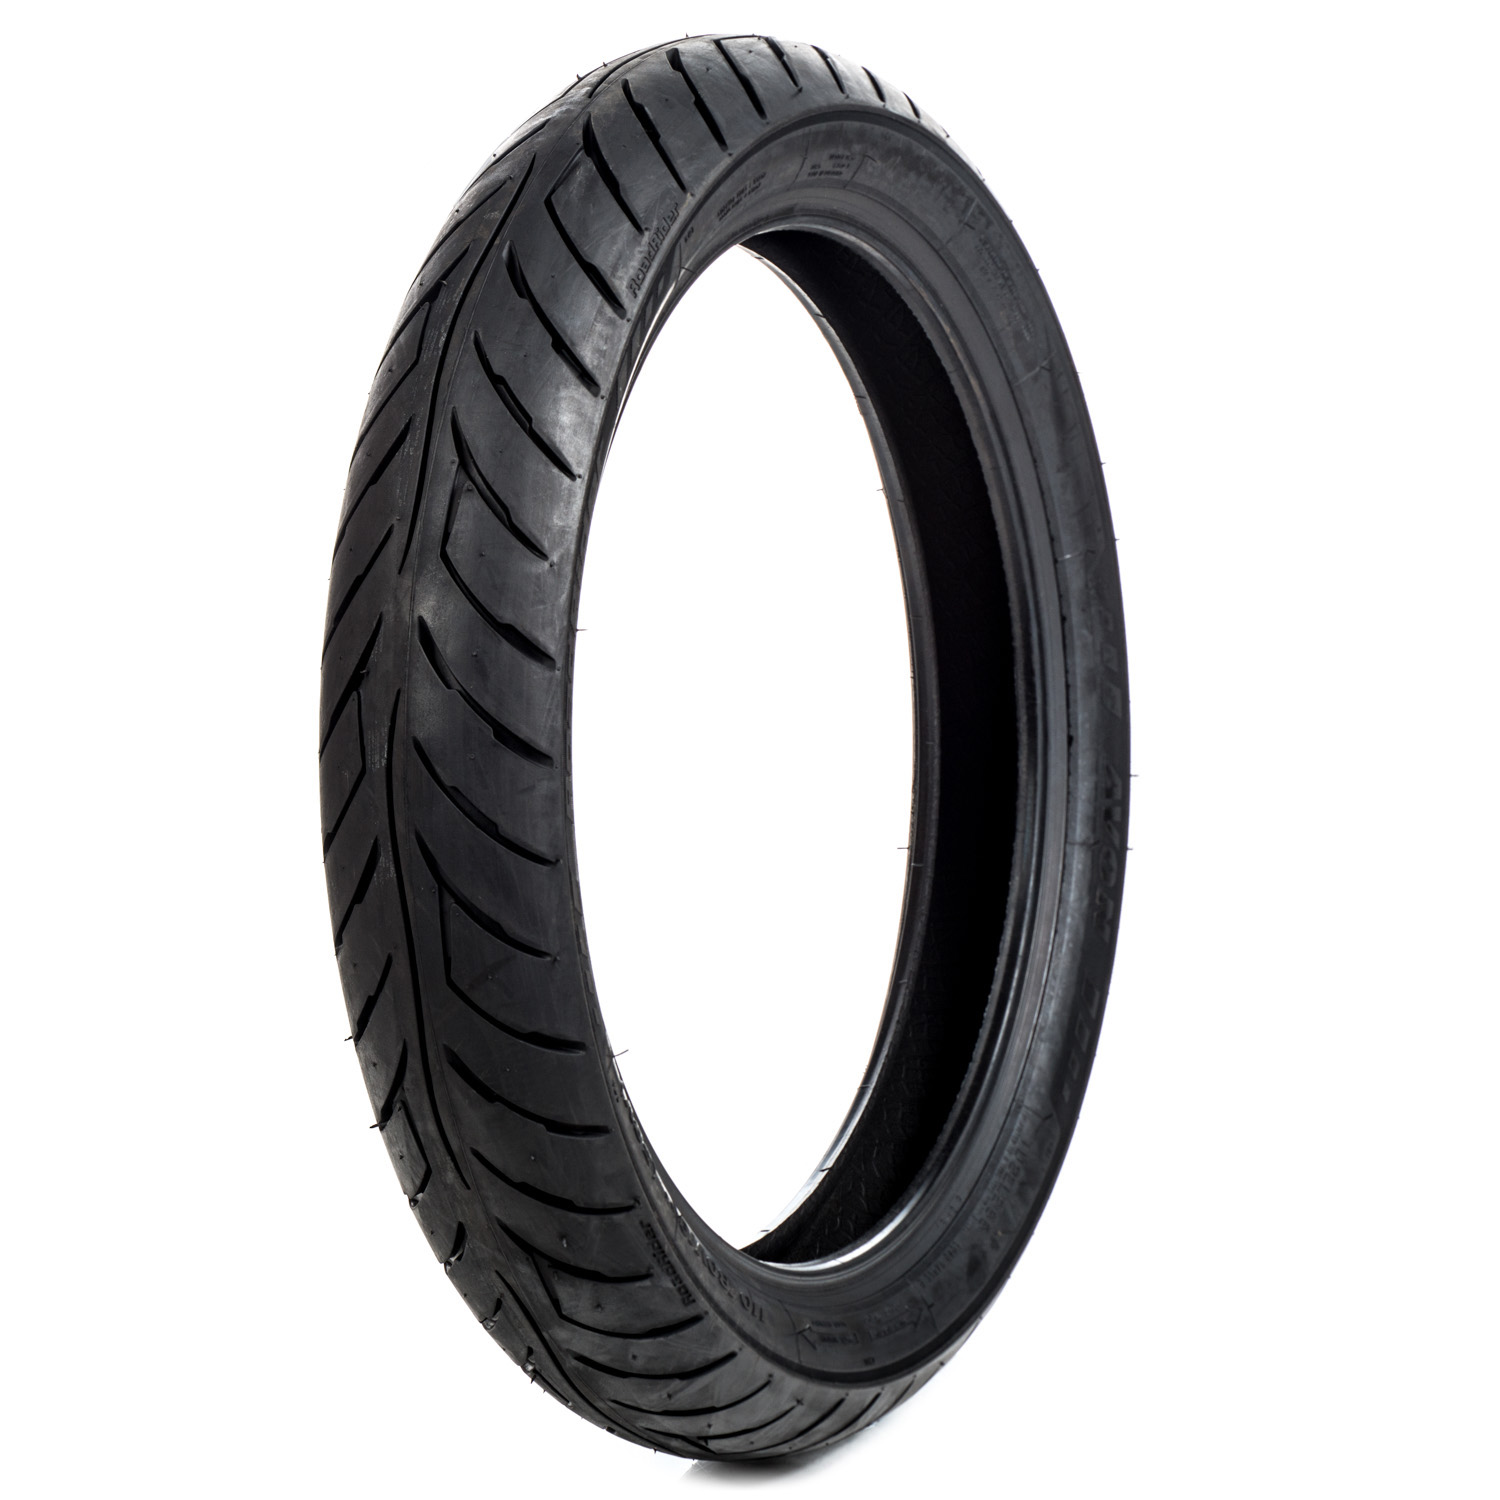 130/80-18 Tyre Rear - Avon Roadrider MK2